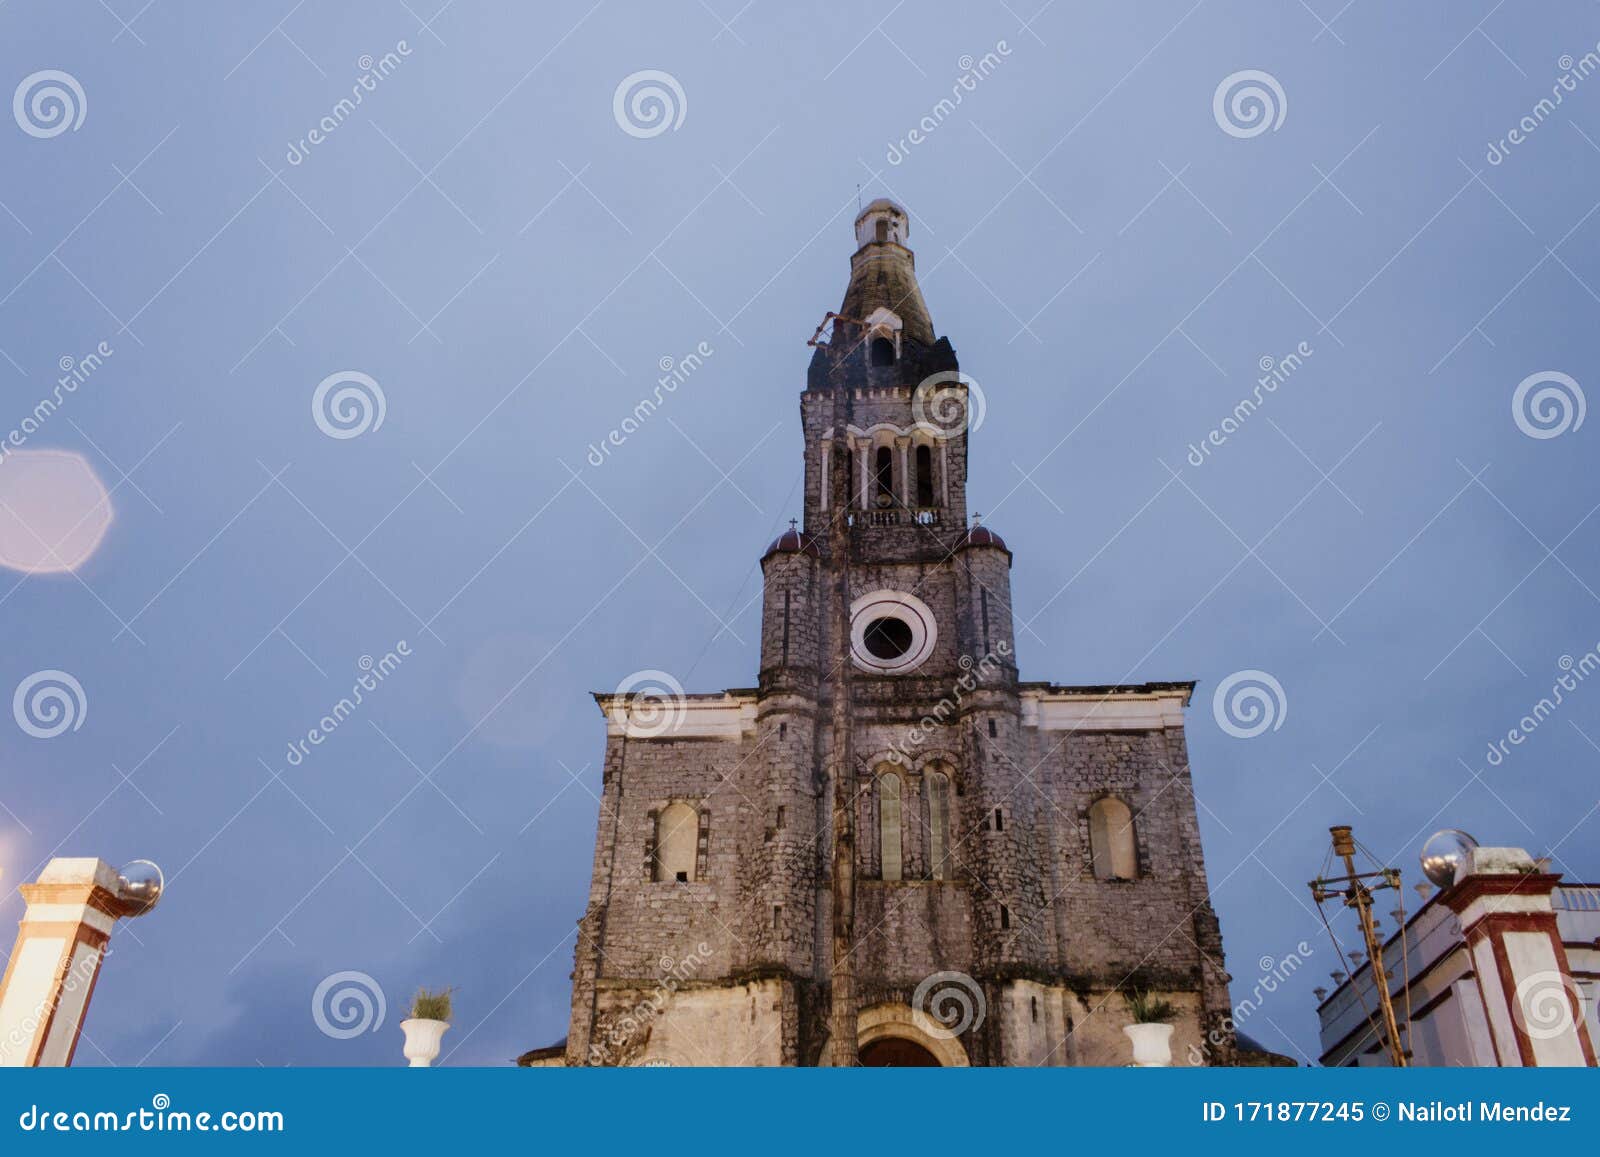 cuetzalan, puebla / mexico-january 29, 2020. panoramic view of the city at night, including the parish church of san francisco de